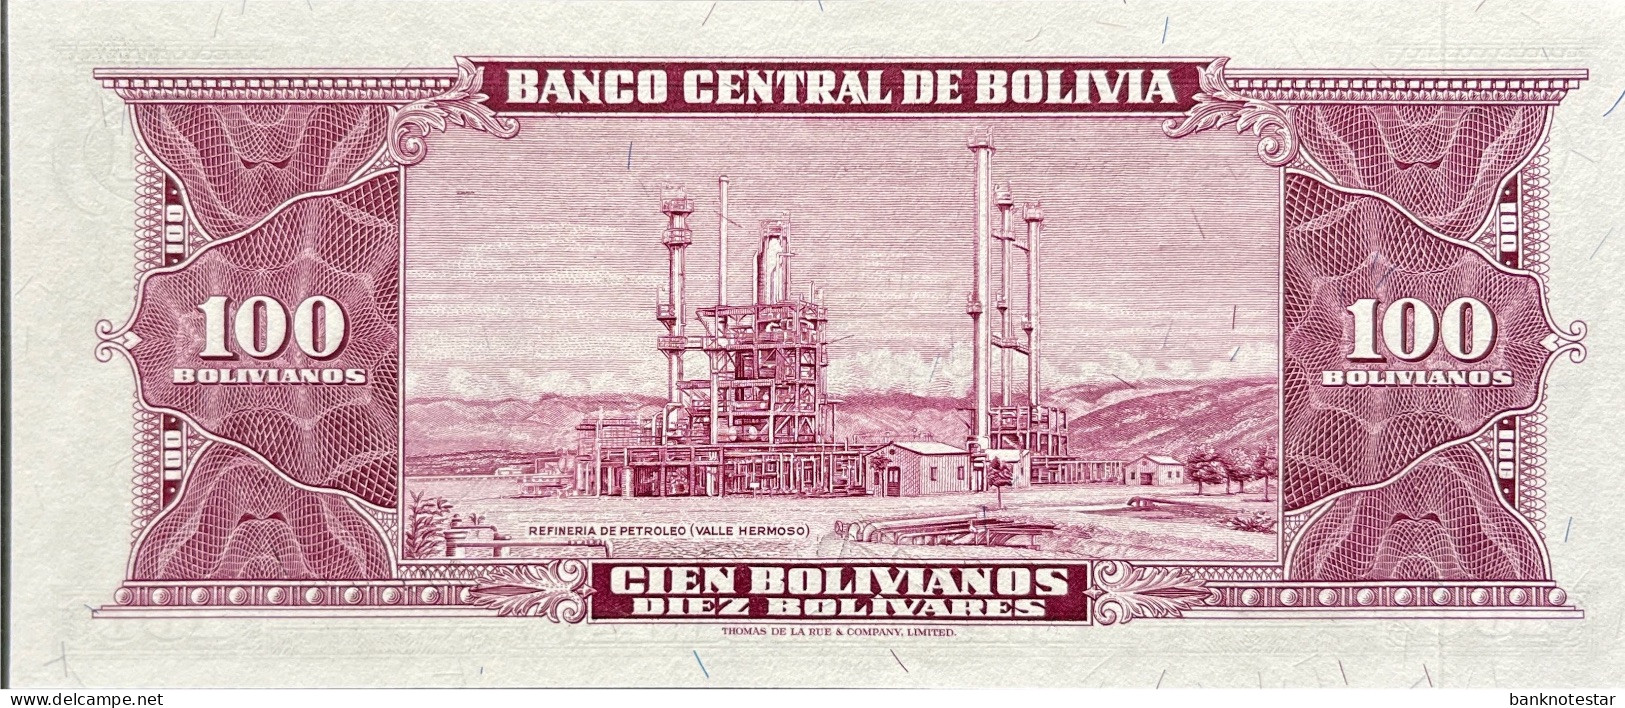 Bolivia 100 Bolivianos, P-147 (L.1945) - UNC - Bolivië